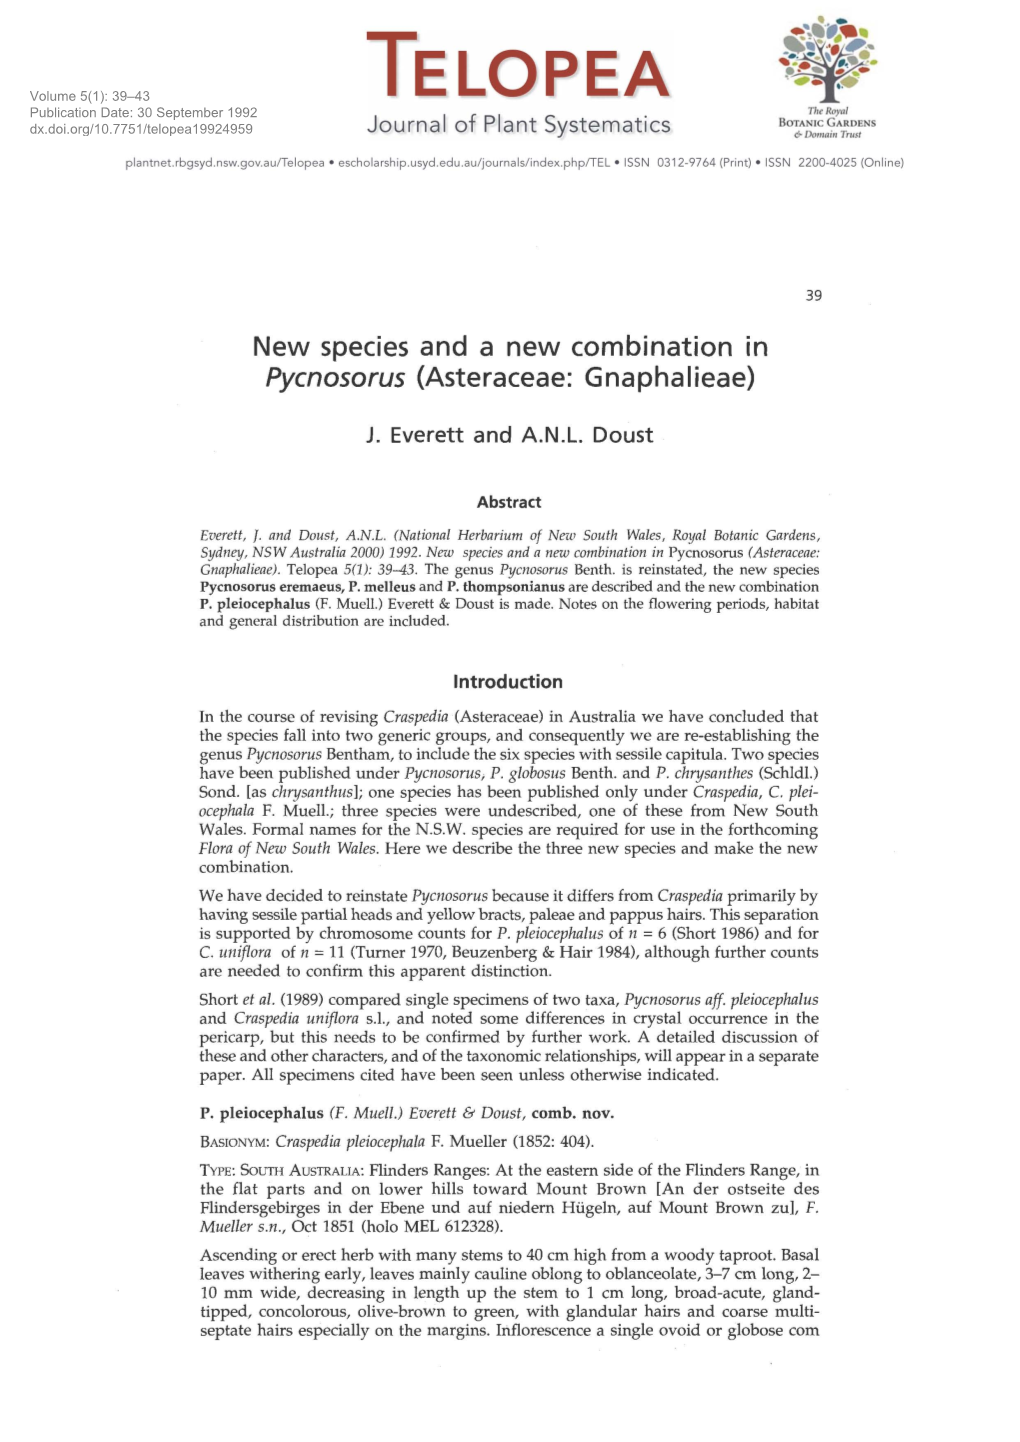 New Species and a New Combination in Pycnosorus (Asteraceae: Gnaphalieae)